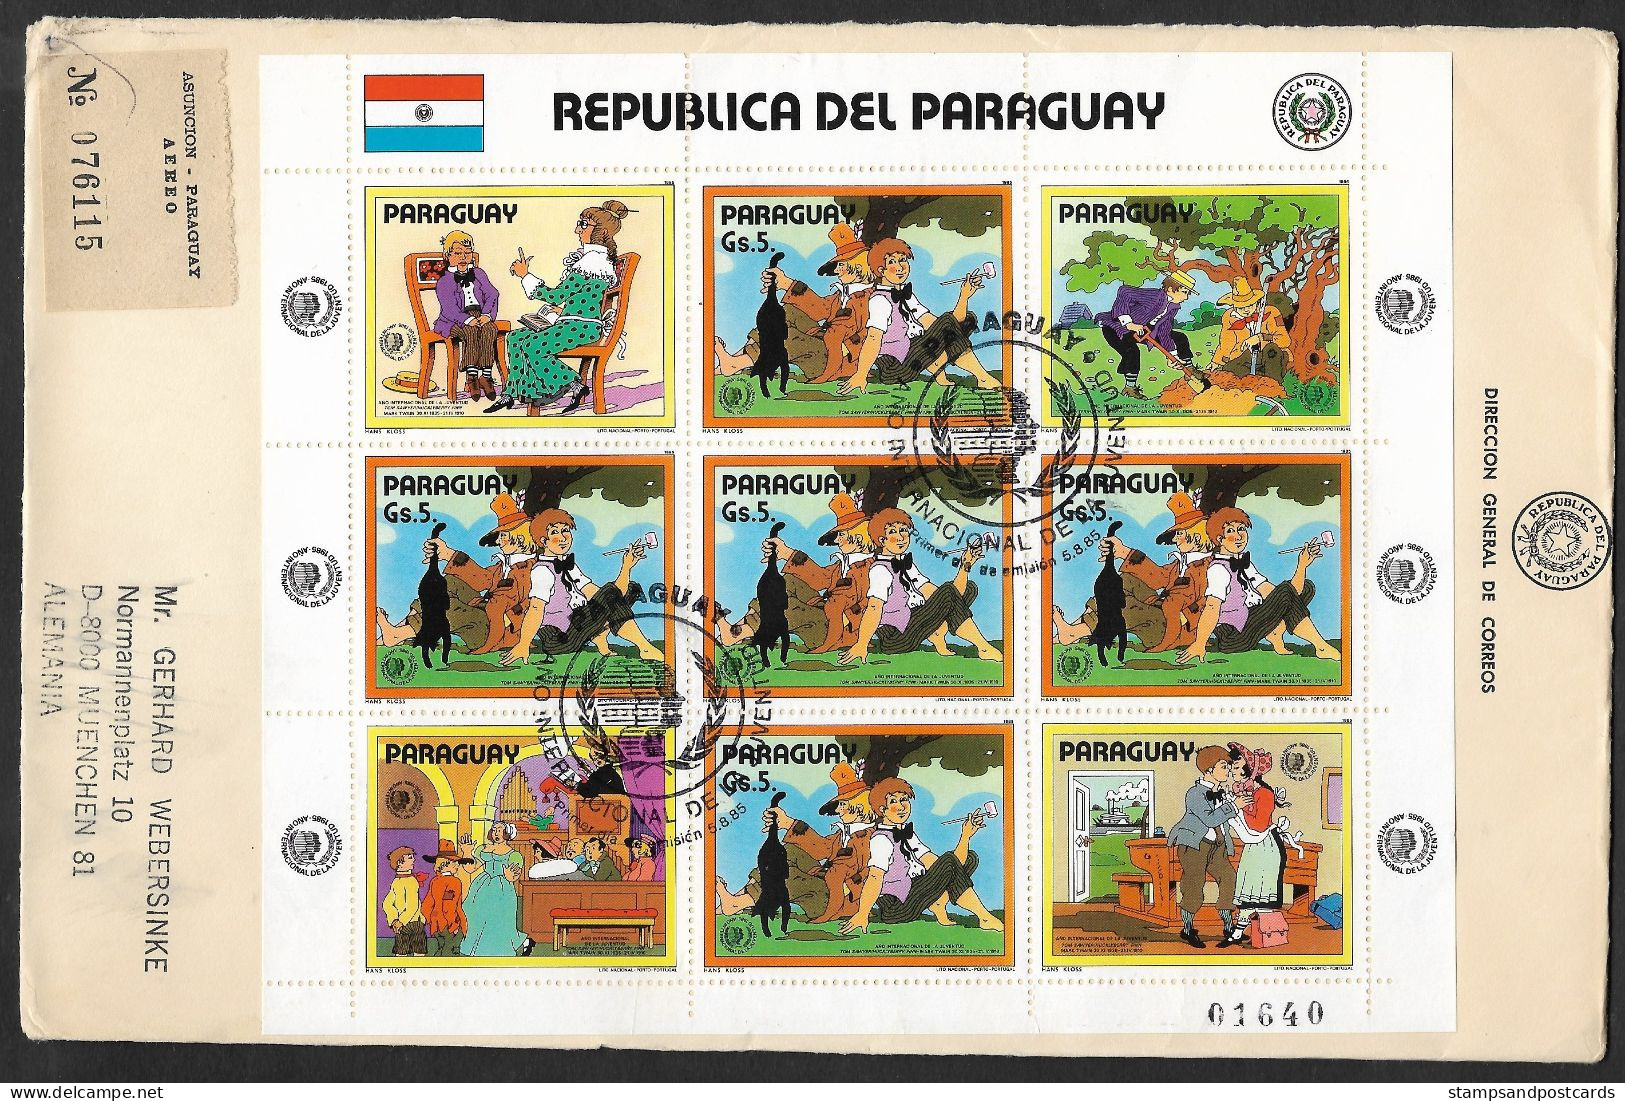 Paraguay 1985 FDC Recommandée Mark Twain Huckleberry Finn Tom Sawyer Année Internationale Jeunesse R FDC Int. Youth Year - Fiabe, Racconti Popolari & Leggende